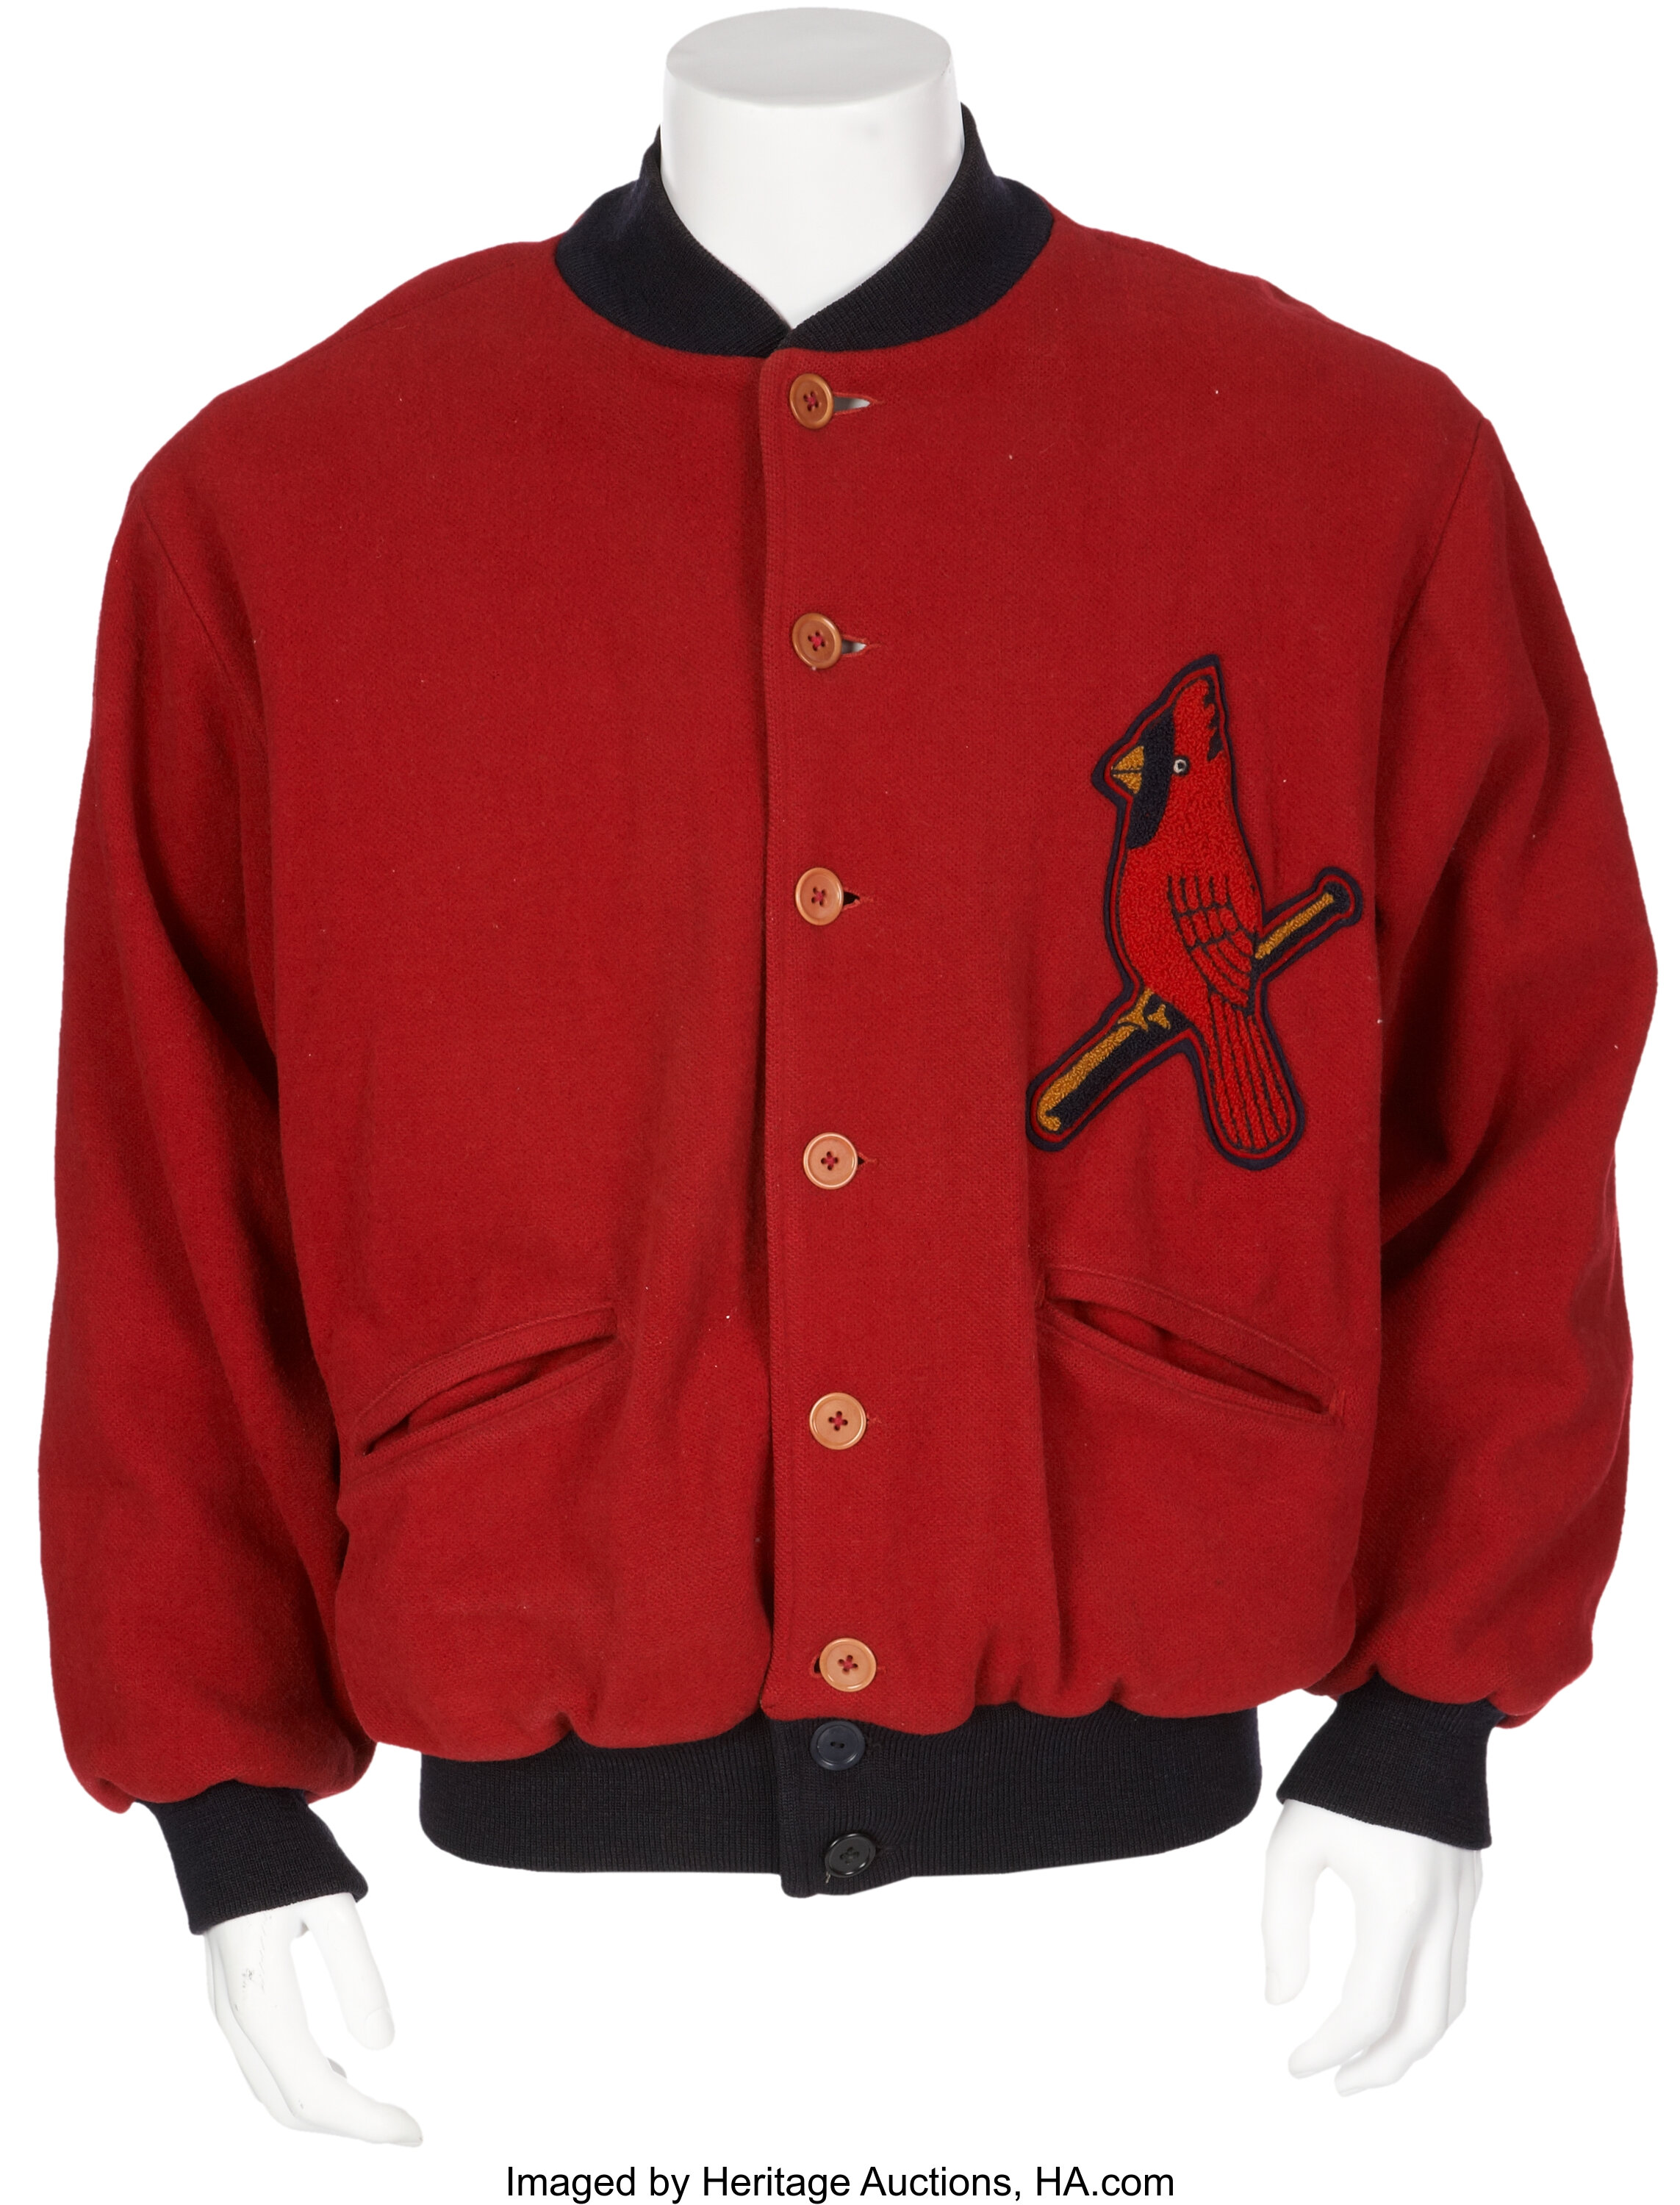 Vintage St Louis Cardinals Shirt - William Jacket